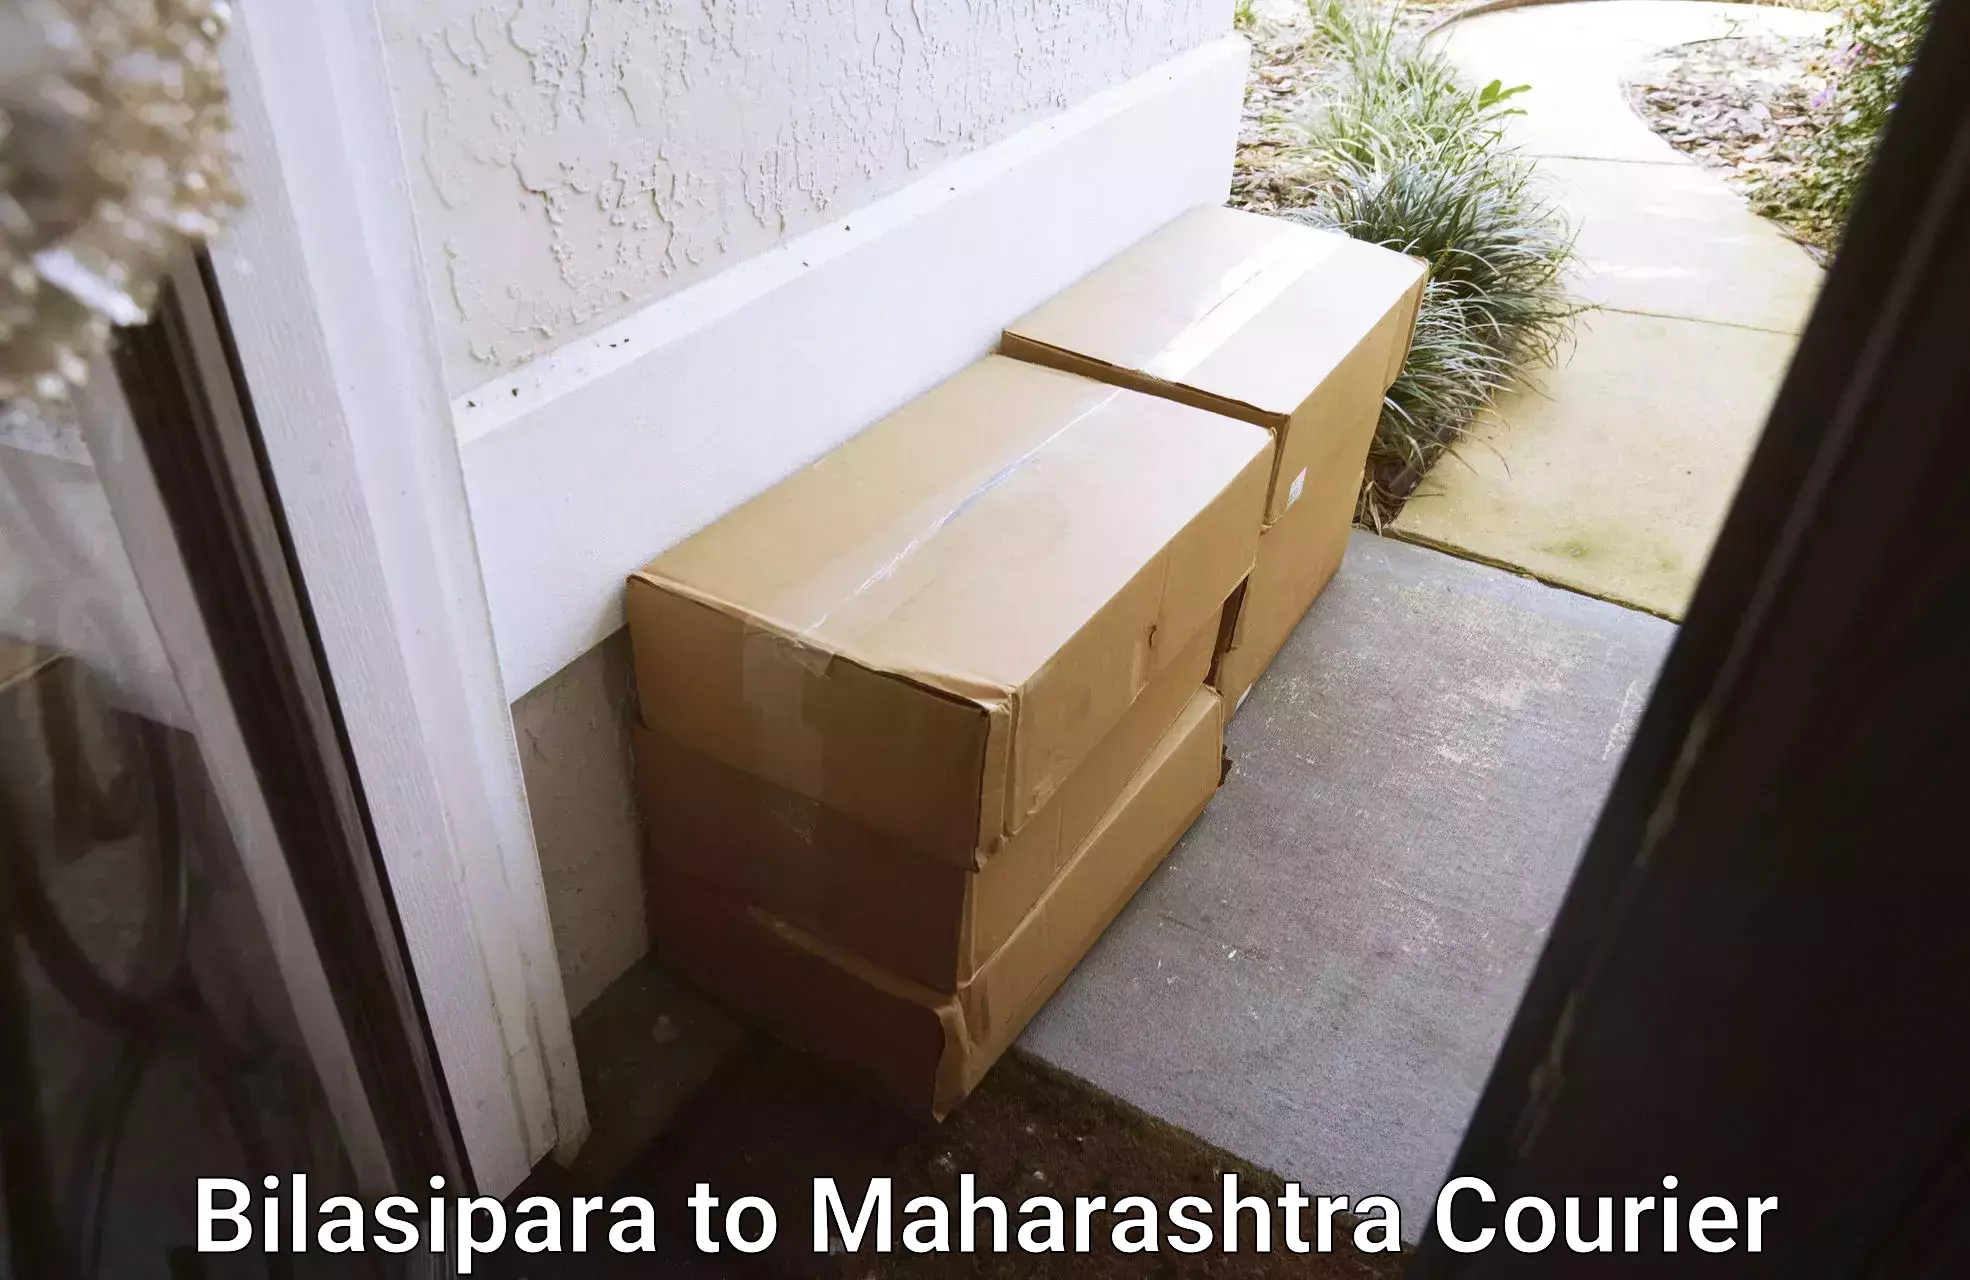 Courier service partnerships Bilasipara to Parbhani